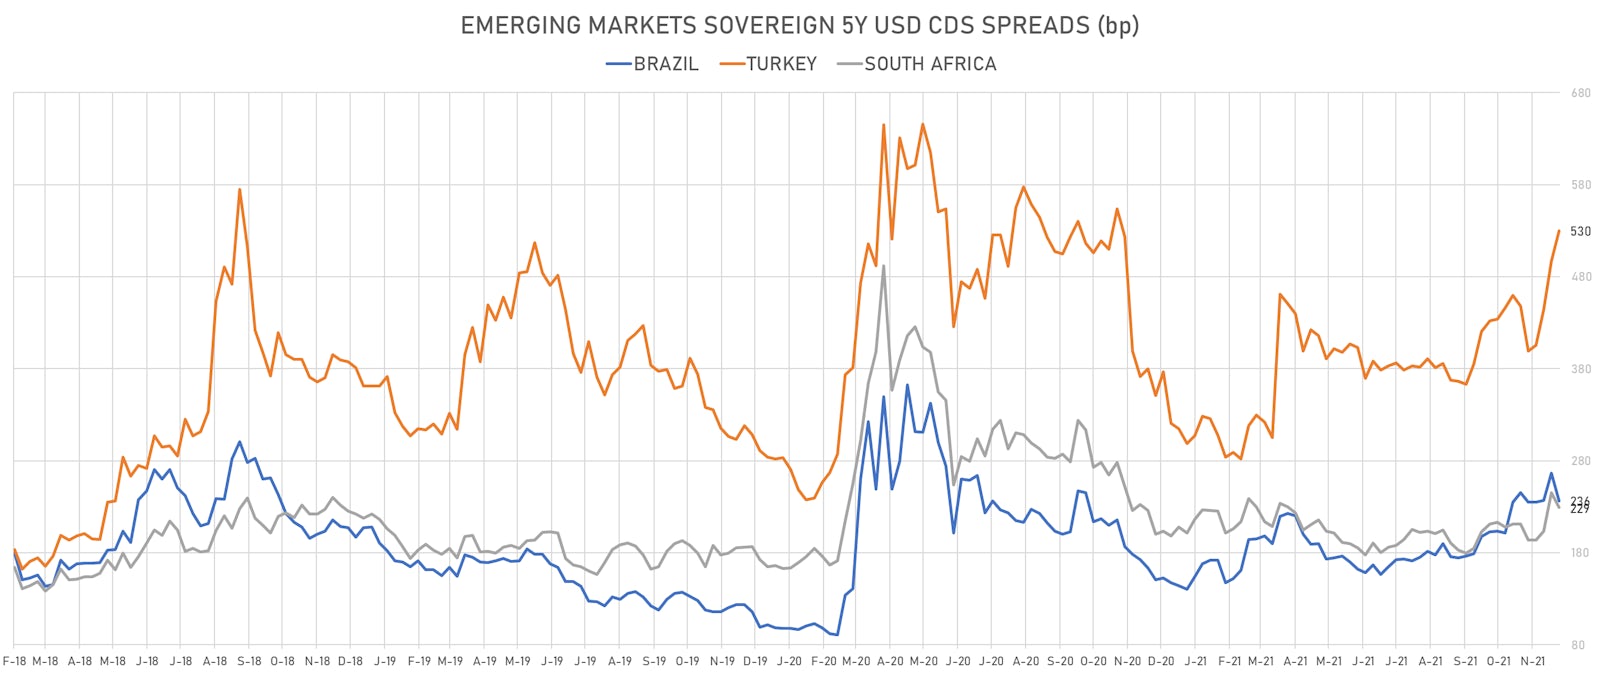 Brazil, South Africa, Turkey 5Y USD CDS Spreads (basis points) | Sources: ϕpost, Refinitiv data